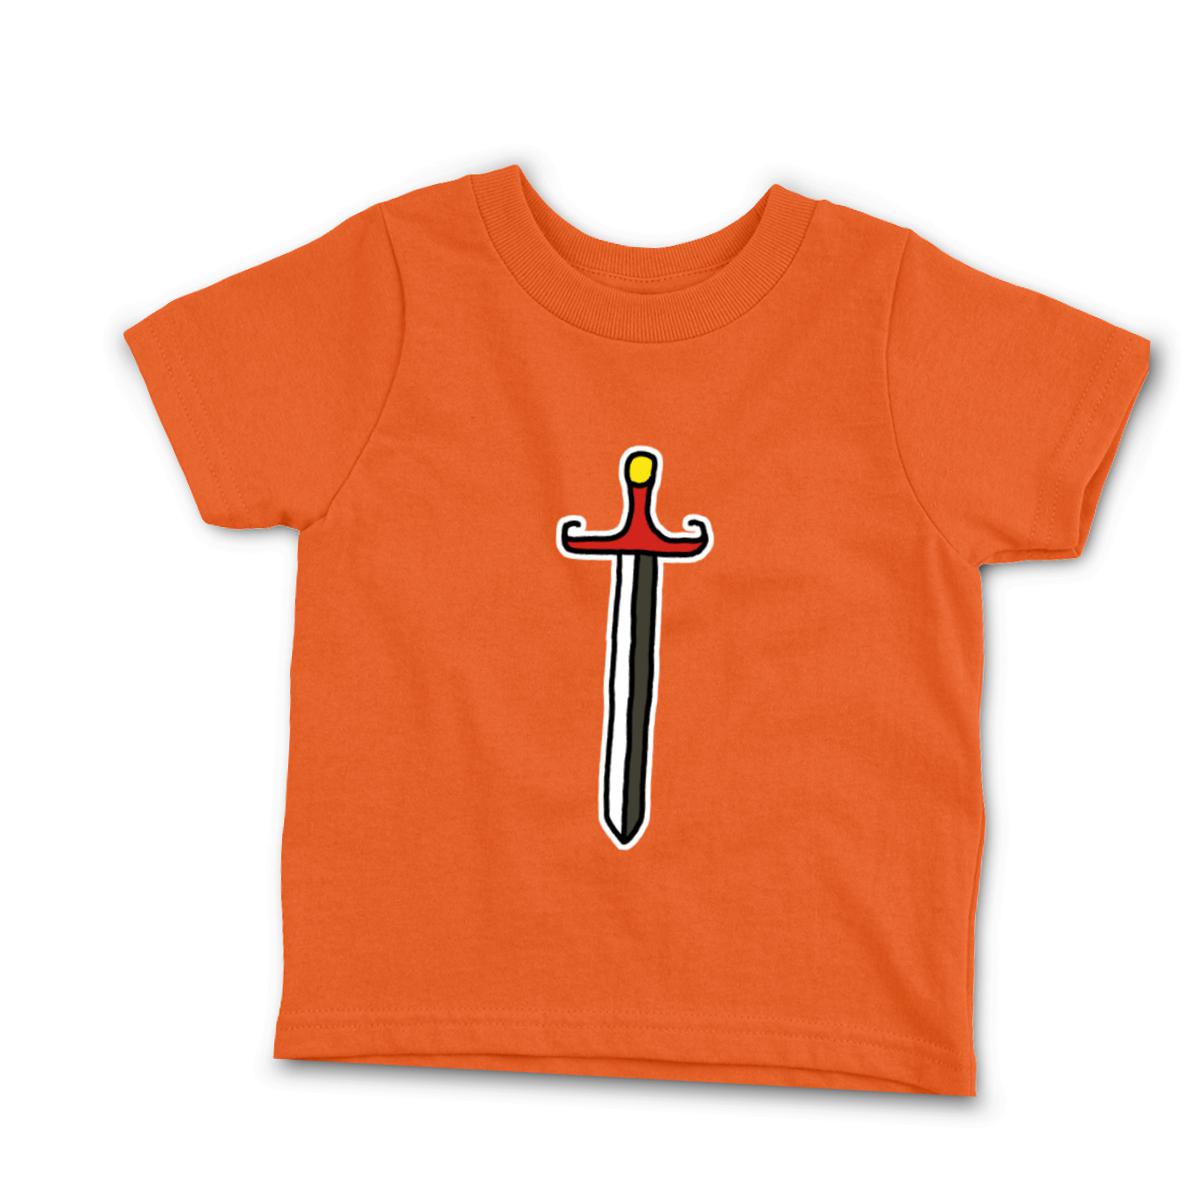 Sword Toddler Tee 2T orange